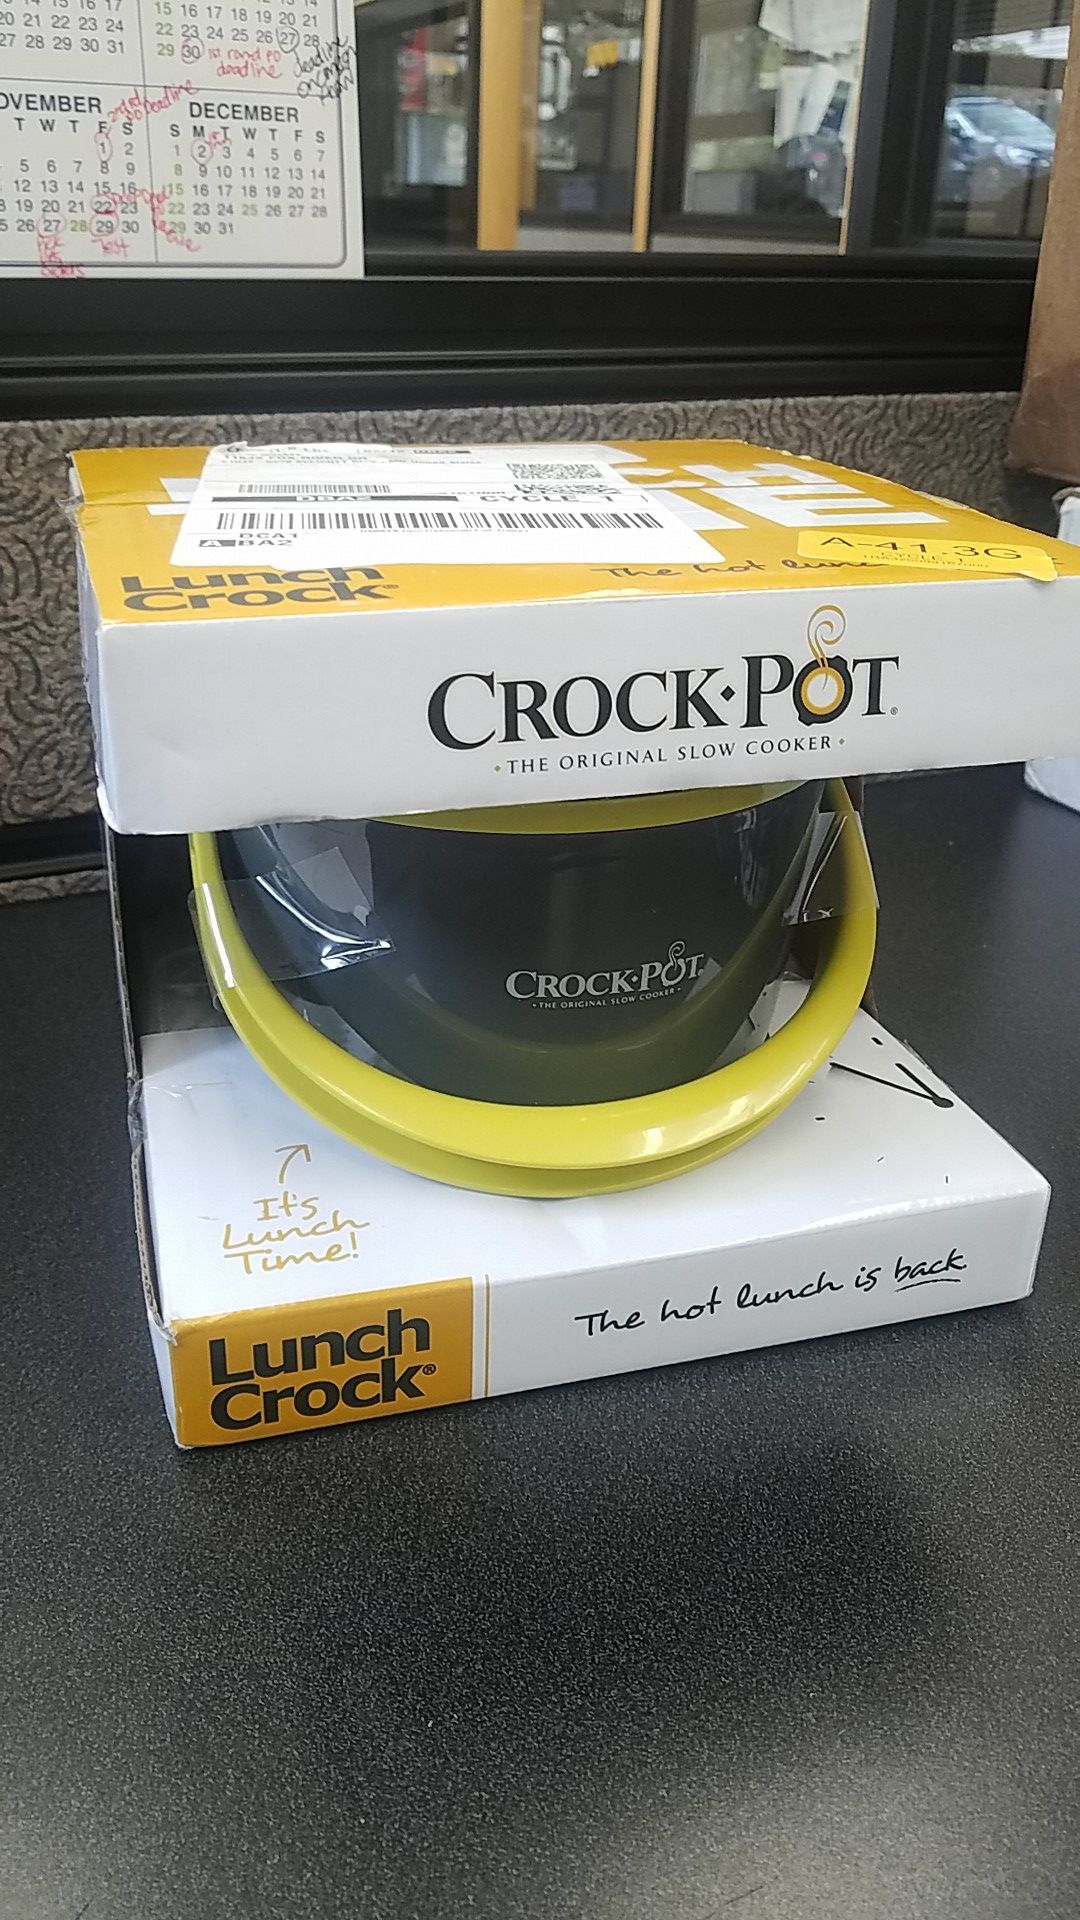 Lunch crock crock pot